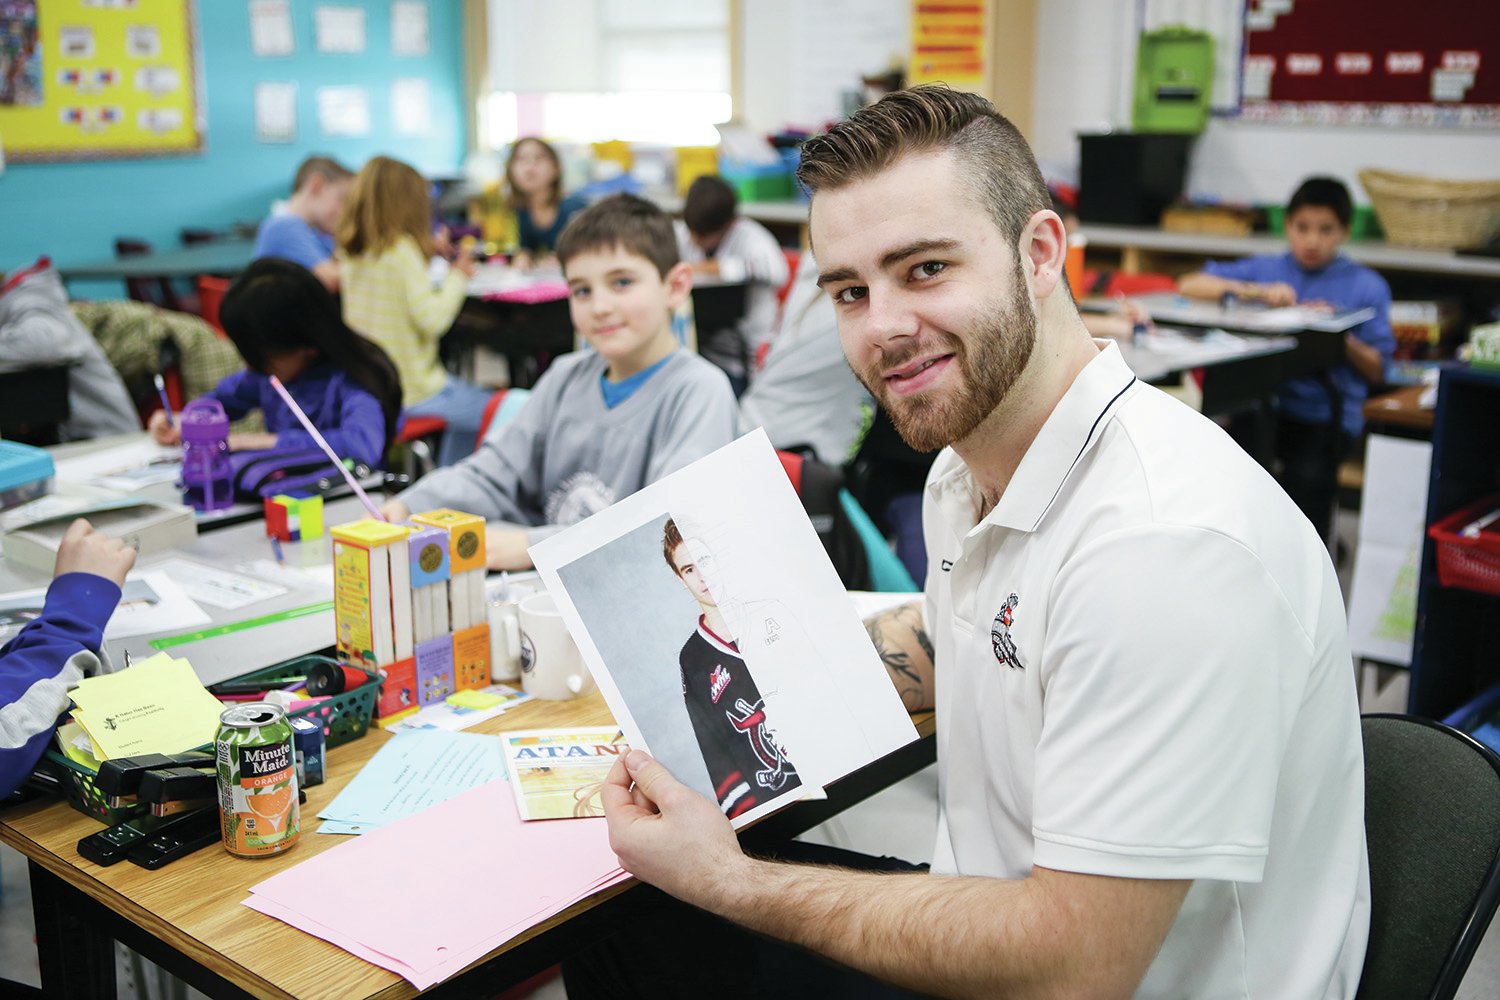 PARTNERSHIP - Red Deer Rebels forward Evan Polei held up his drawing of teammate Brandon Hagel during a special visit to classrooms at Annie L. Gaetz Elementary School.